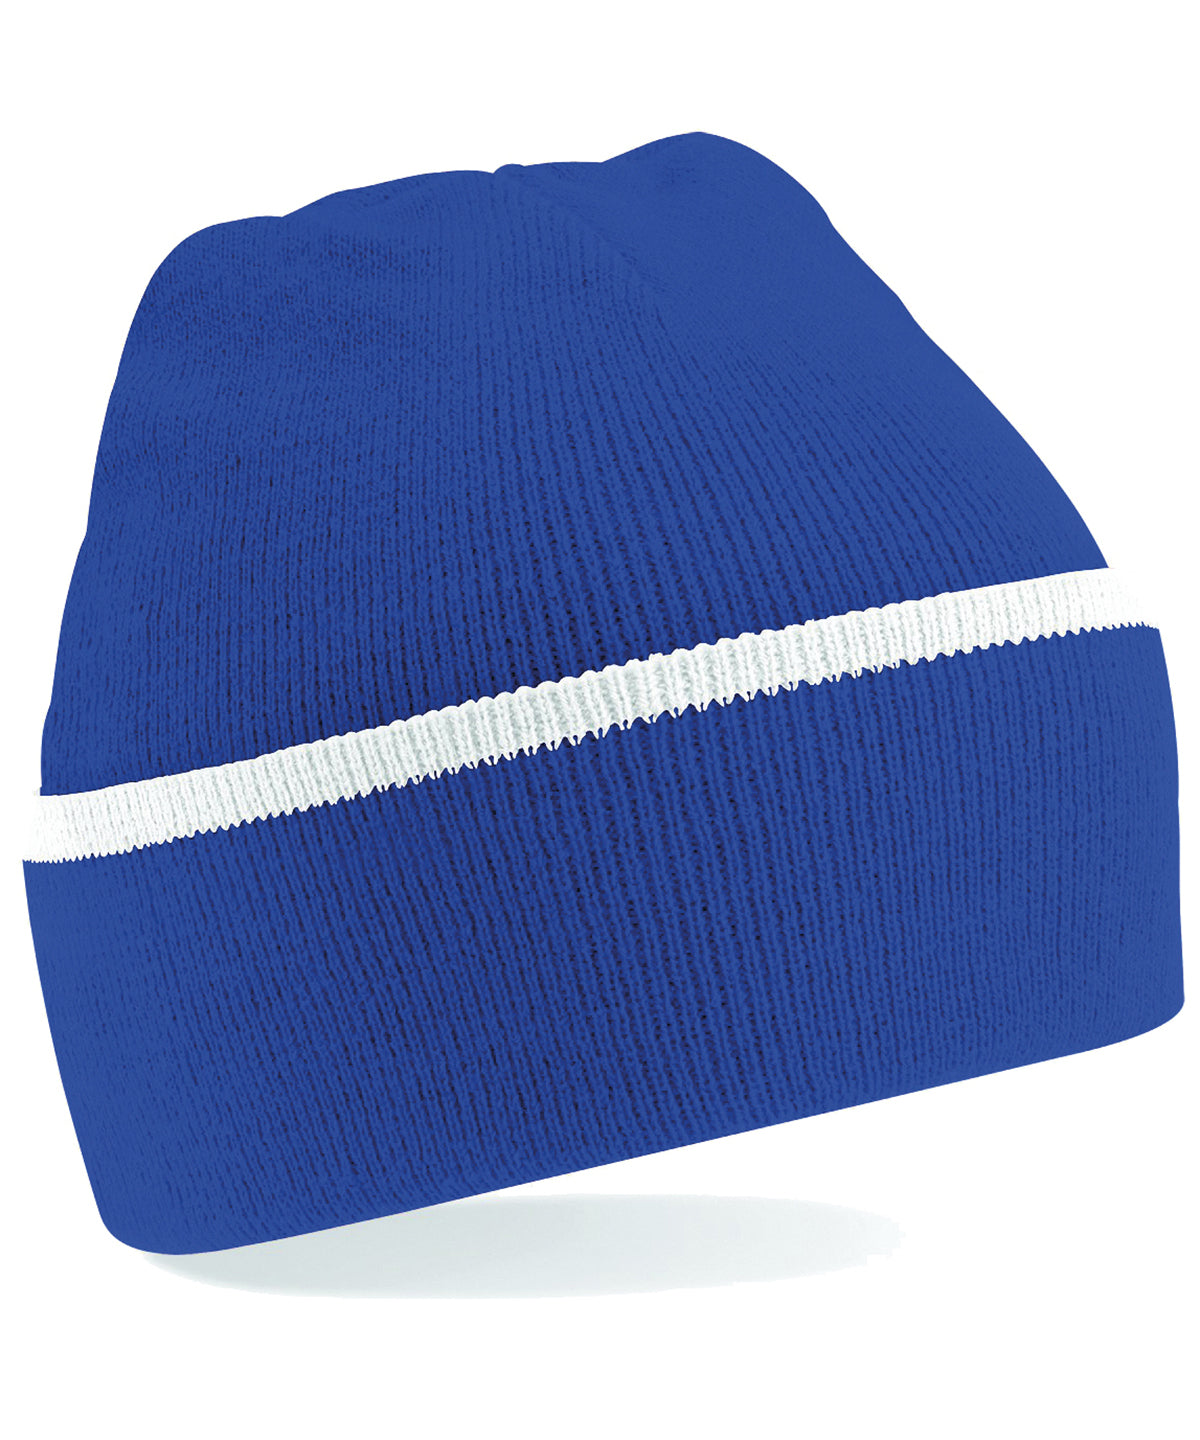 Personalised Hats - Royal Beechfield Teamwear beanie